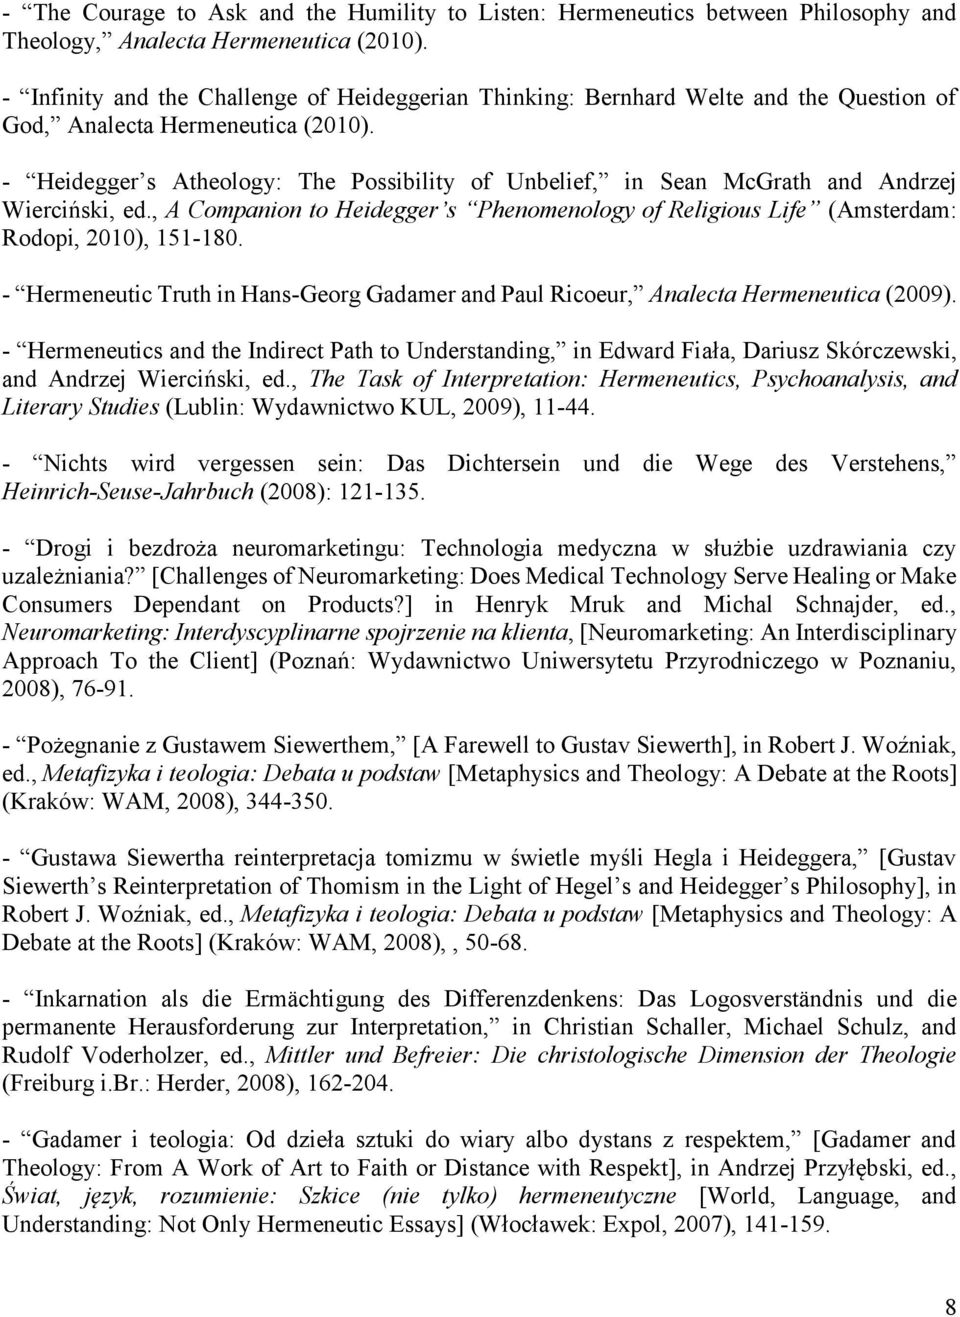 - Heidegger s Atheology: The Possibility of Unbelief, in Sean McGrath and Andrzej Wierciński, ed., A Companion to Heidegger s Phenomenology of Religious Life (Amsterdam: Rodopi, 2010), 151-180.